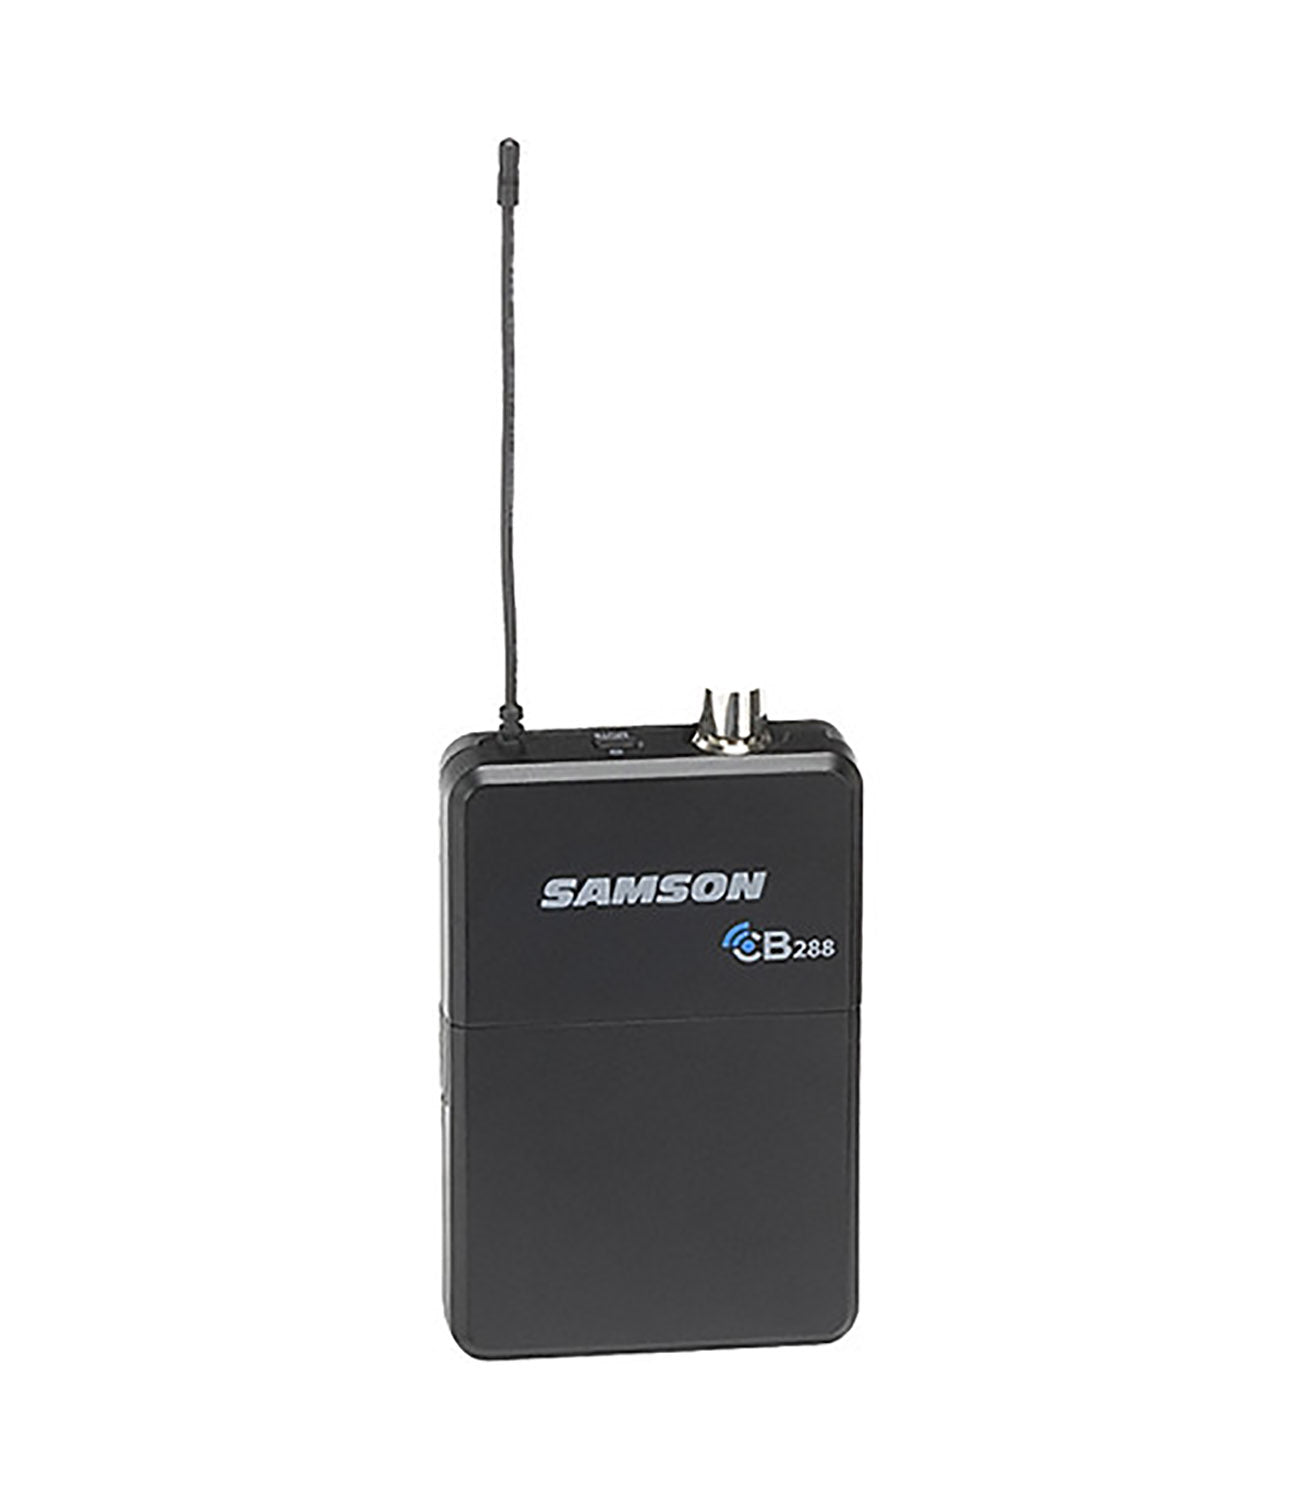 Samson CB288 Beltpack Transmitter for Concert 288 Wireless System - H Band, Channel B - Hollywood DJ